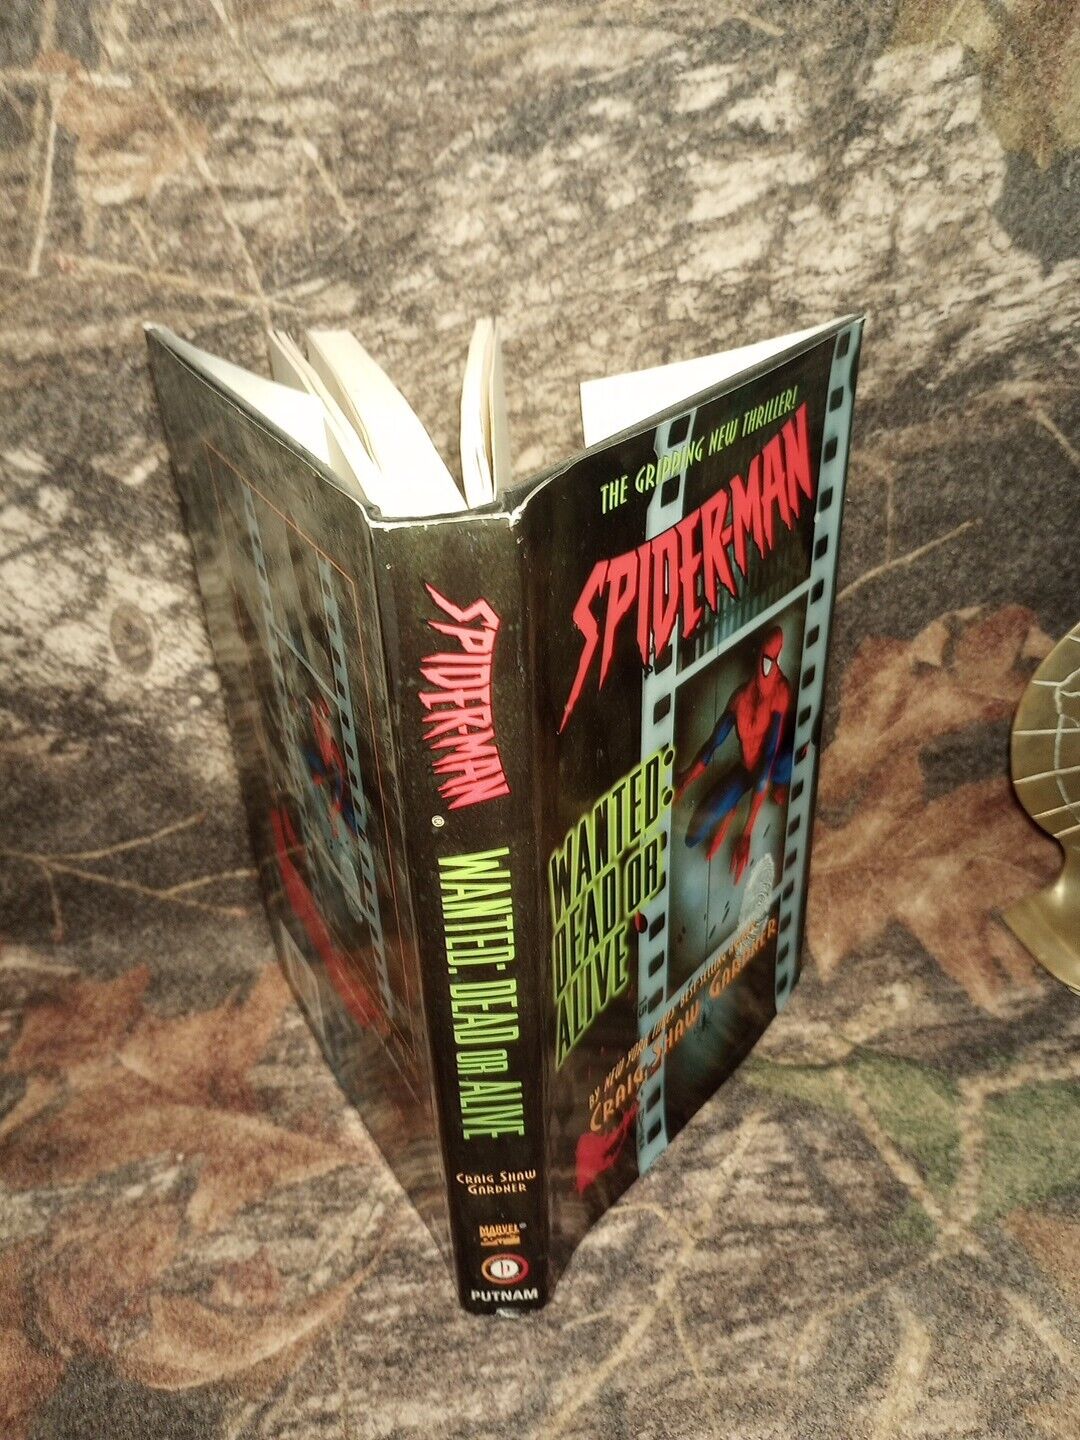 Spider-Man Wanted Dead or Alive  1998 Craig Shaw Gardener Hardcover